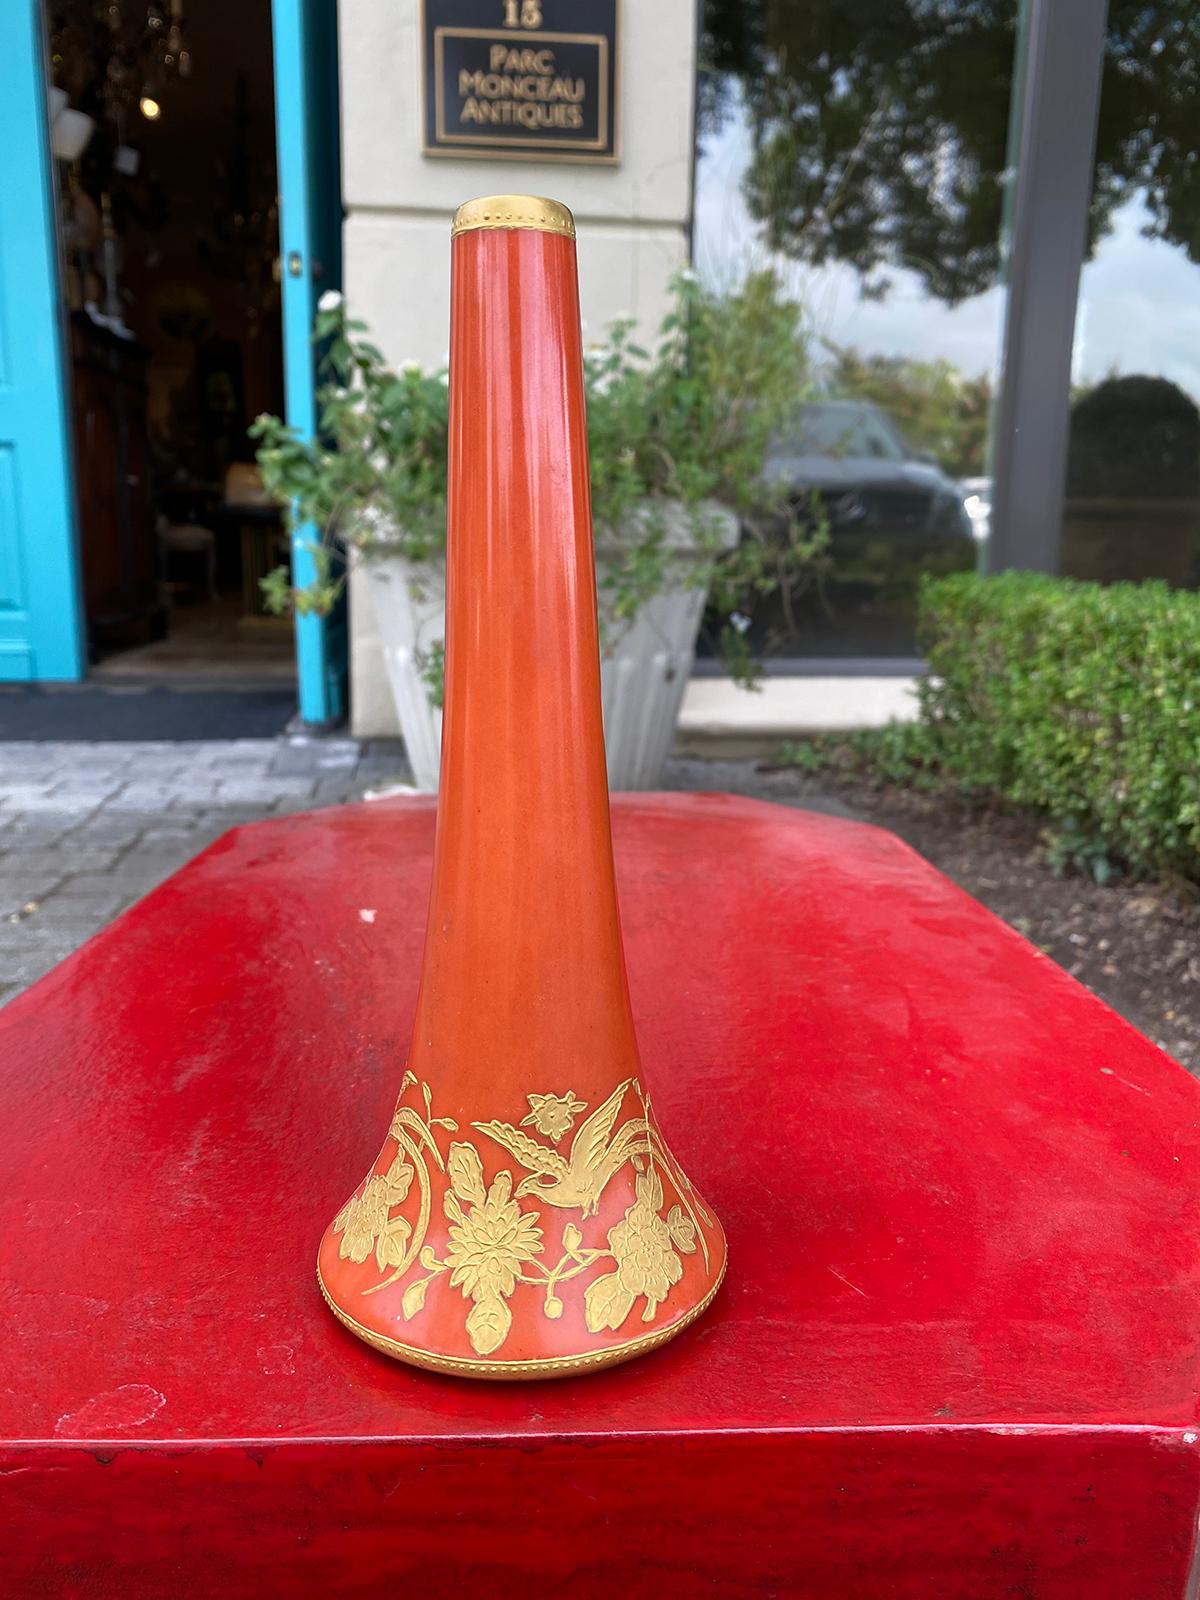 American 19th century marked Fraunfelter China orange and gold porcelain trumpet vase or bud vase. Marked 98.